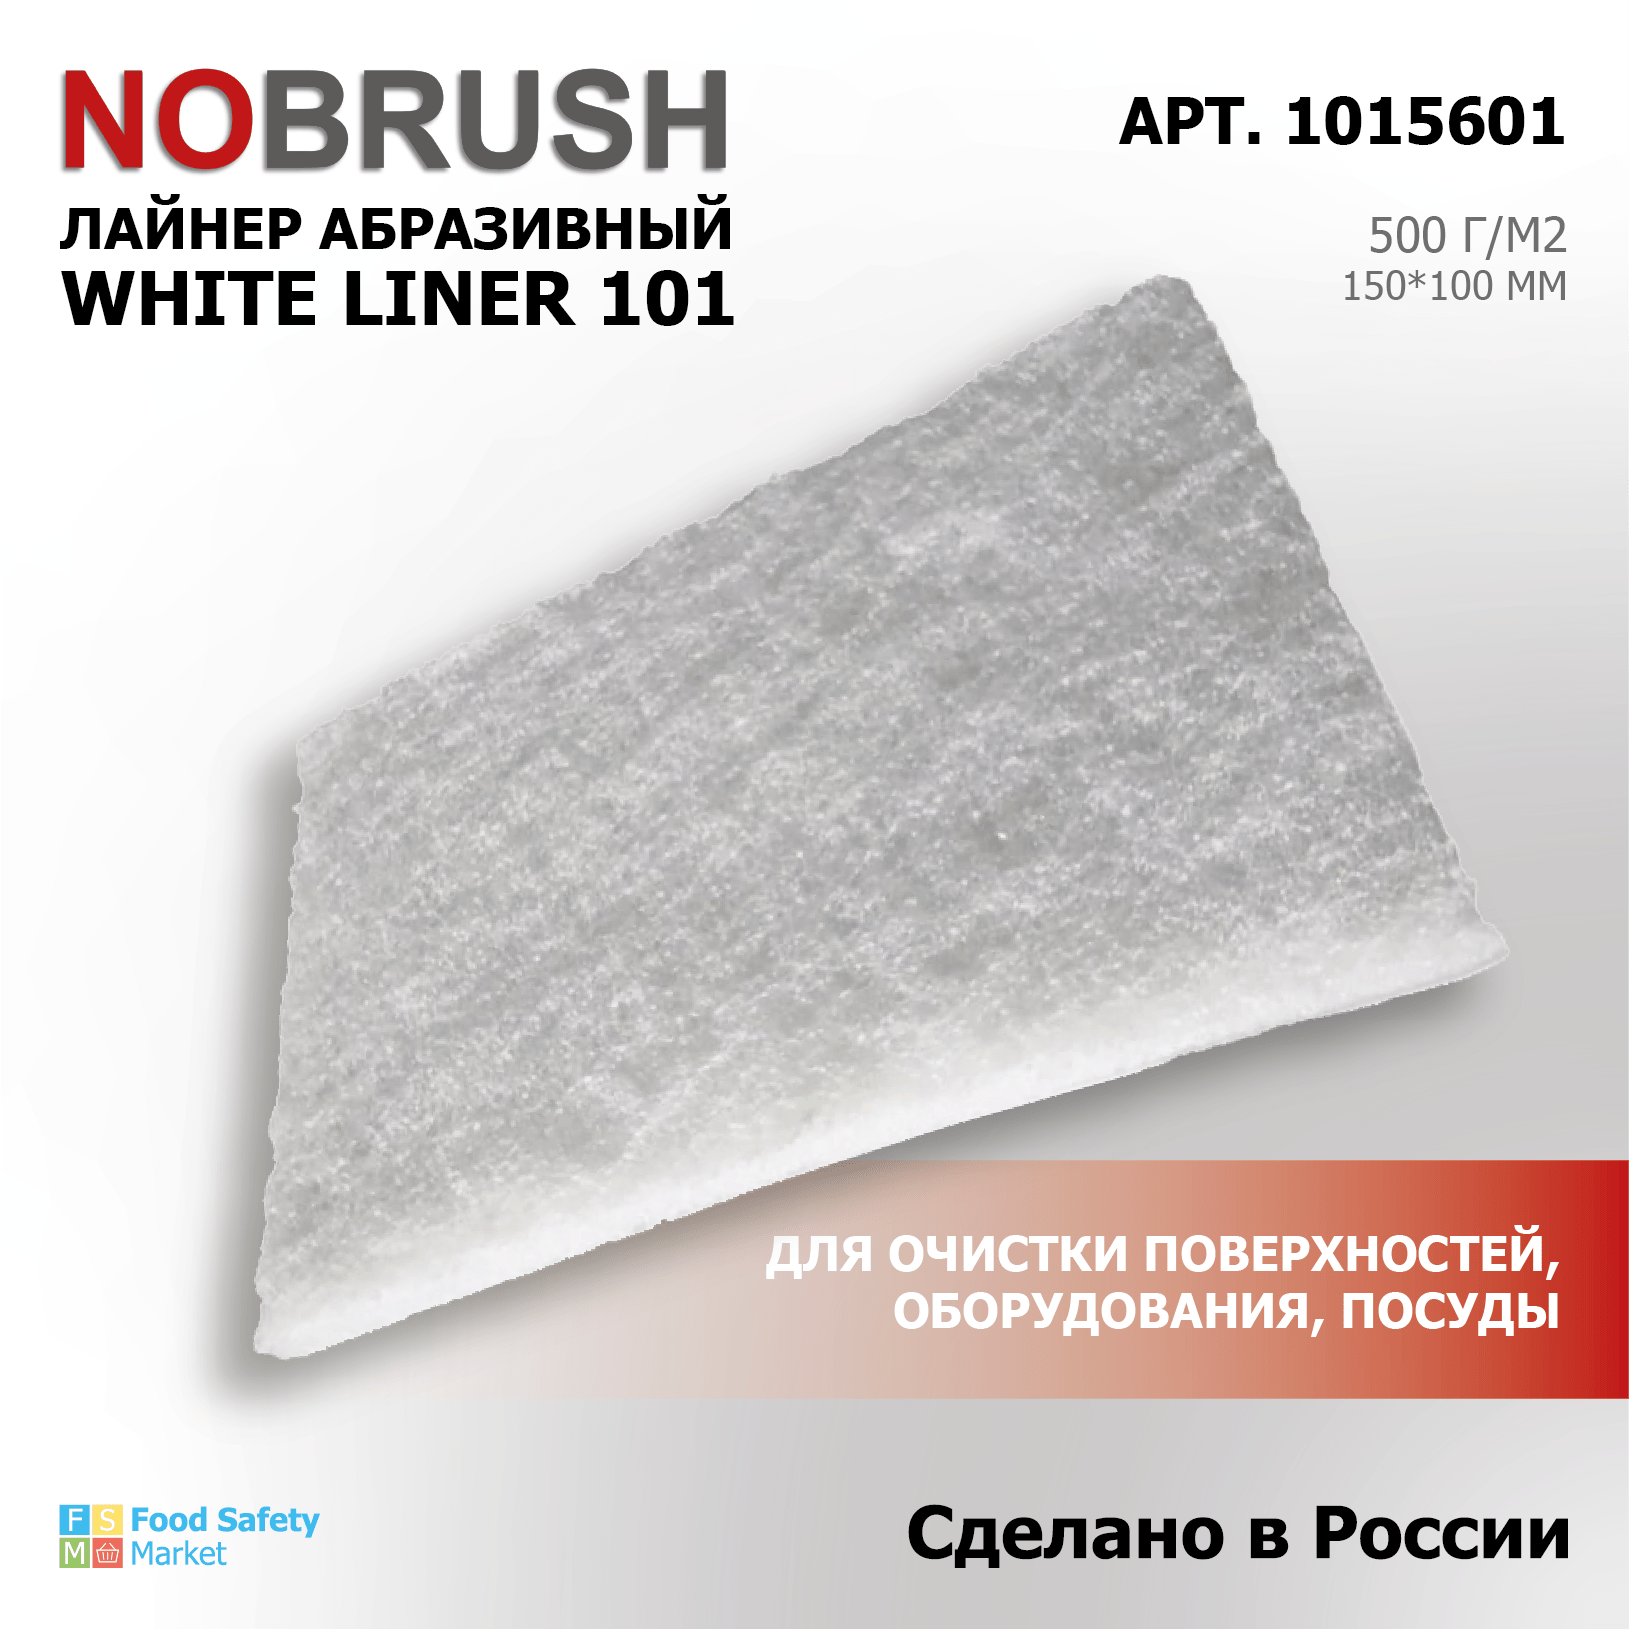 Лайнер абразивный (пад) HACCPER NOBRUSH White liner 102 для поверхностей и инвентаря,100*150мм